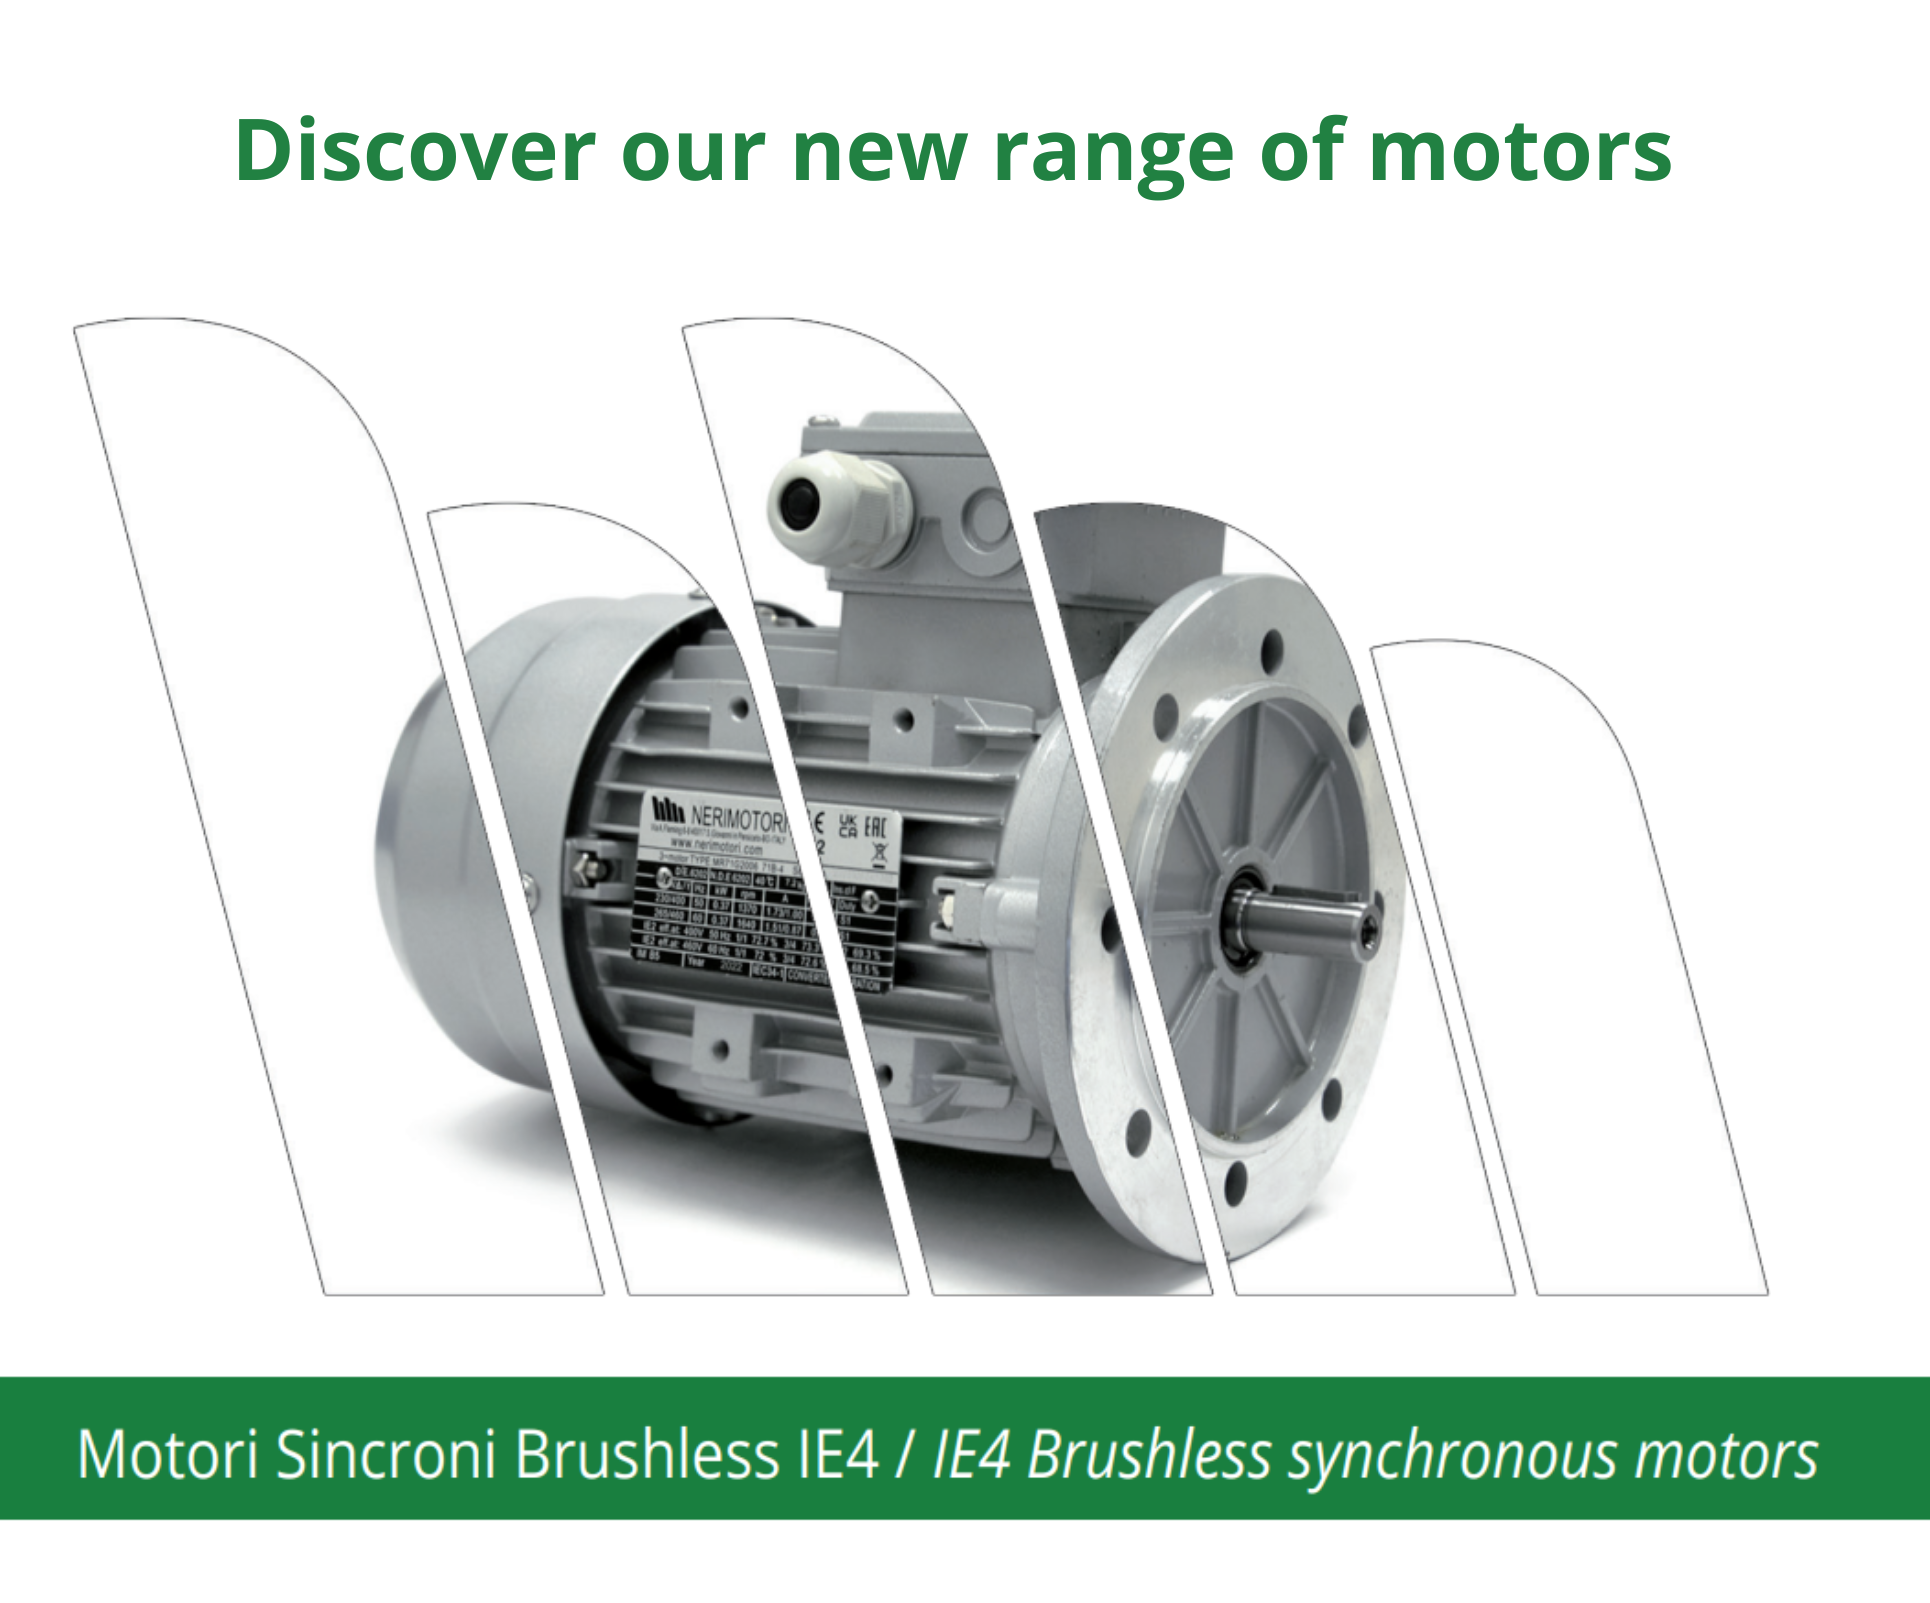 IE4 Brushless synchronous motors